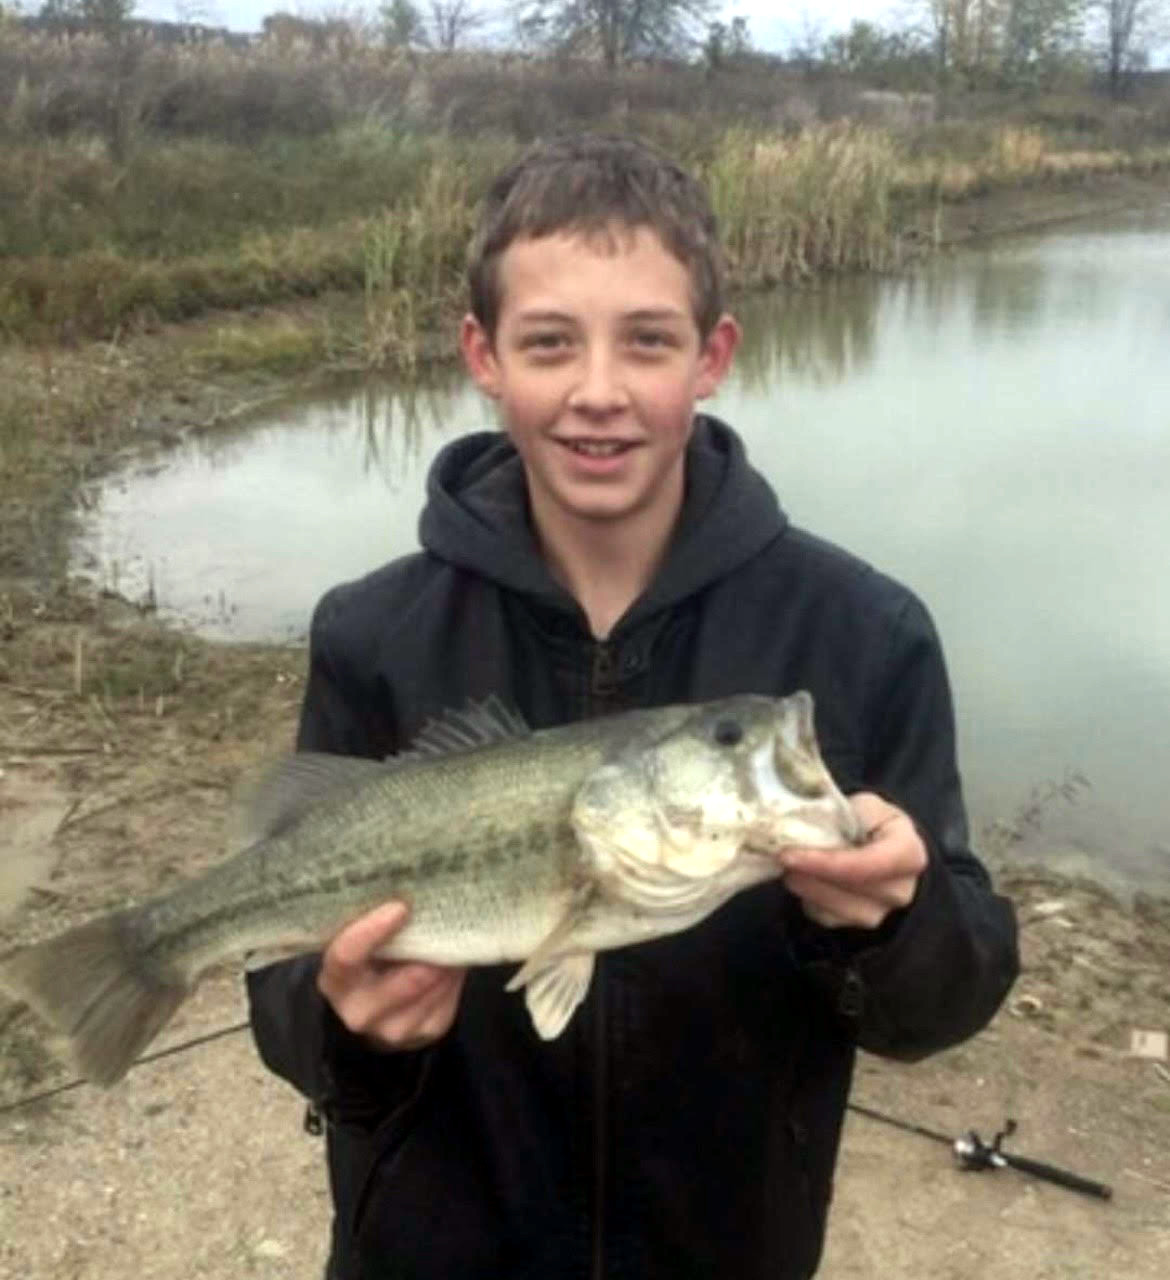 Boy with fish